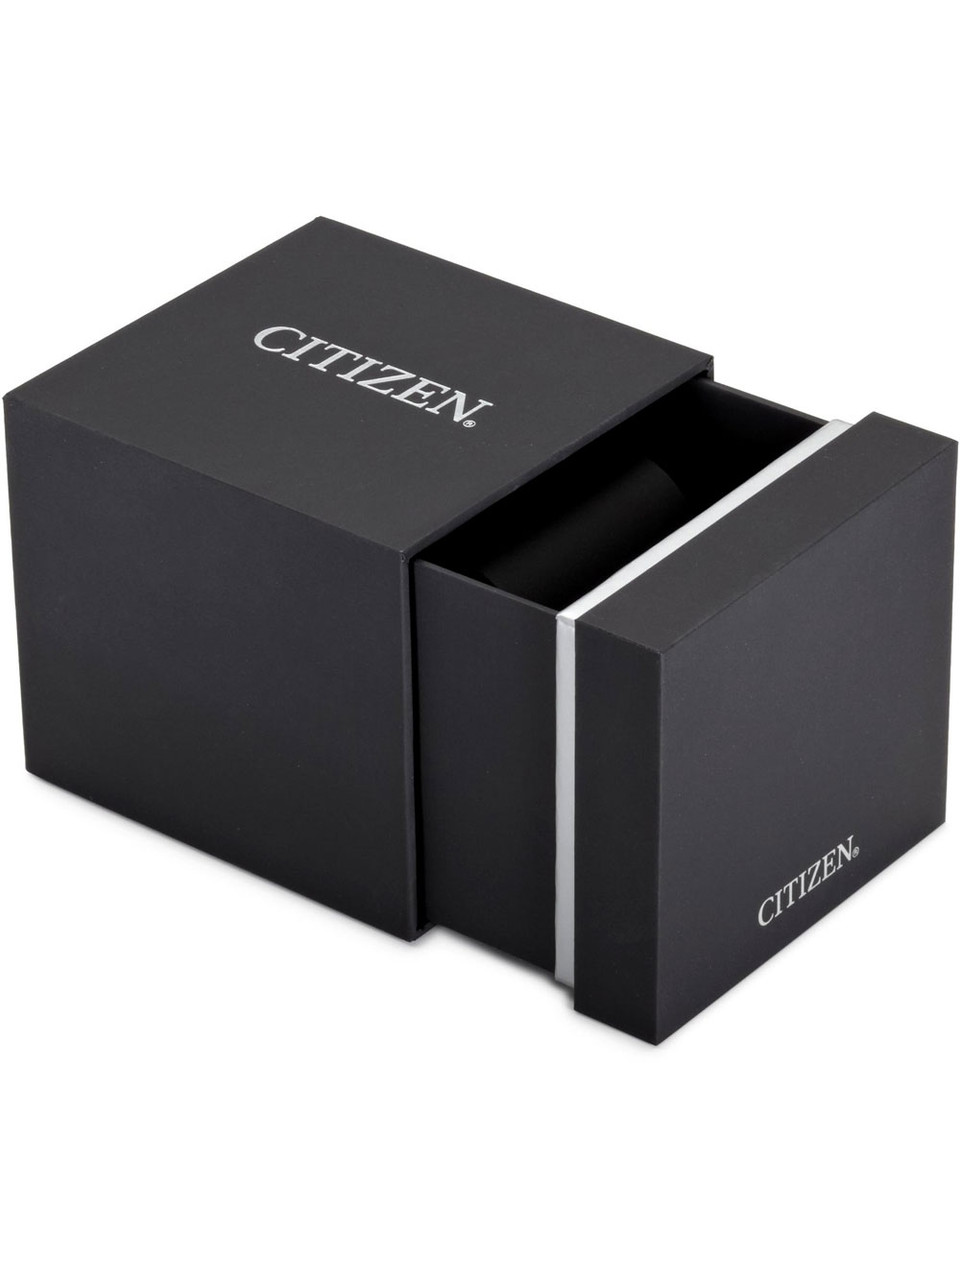 Citizen CA0700-86L Eco-Drive Super-Titanium Chronograph ATM 10 - 43mm Genuine owlica | Watches